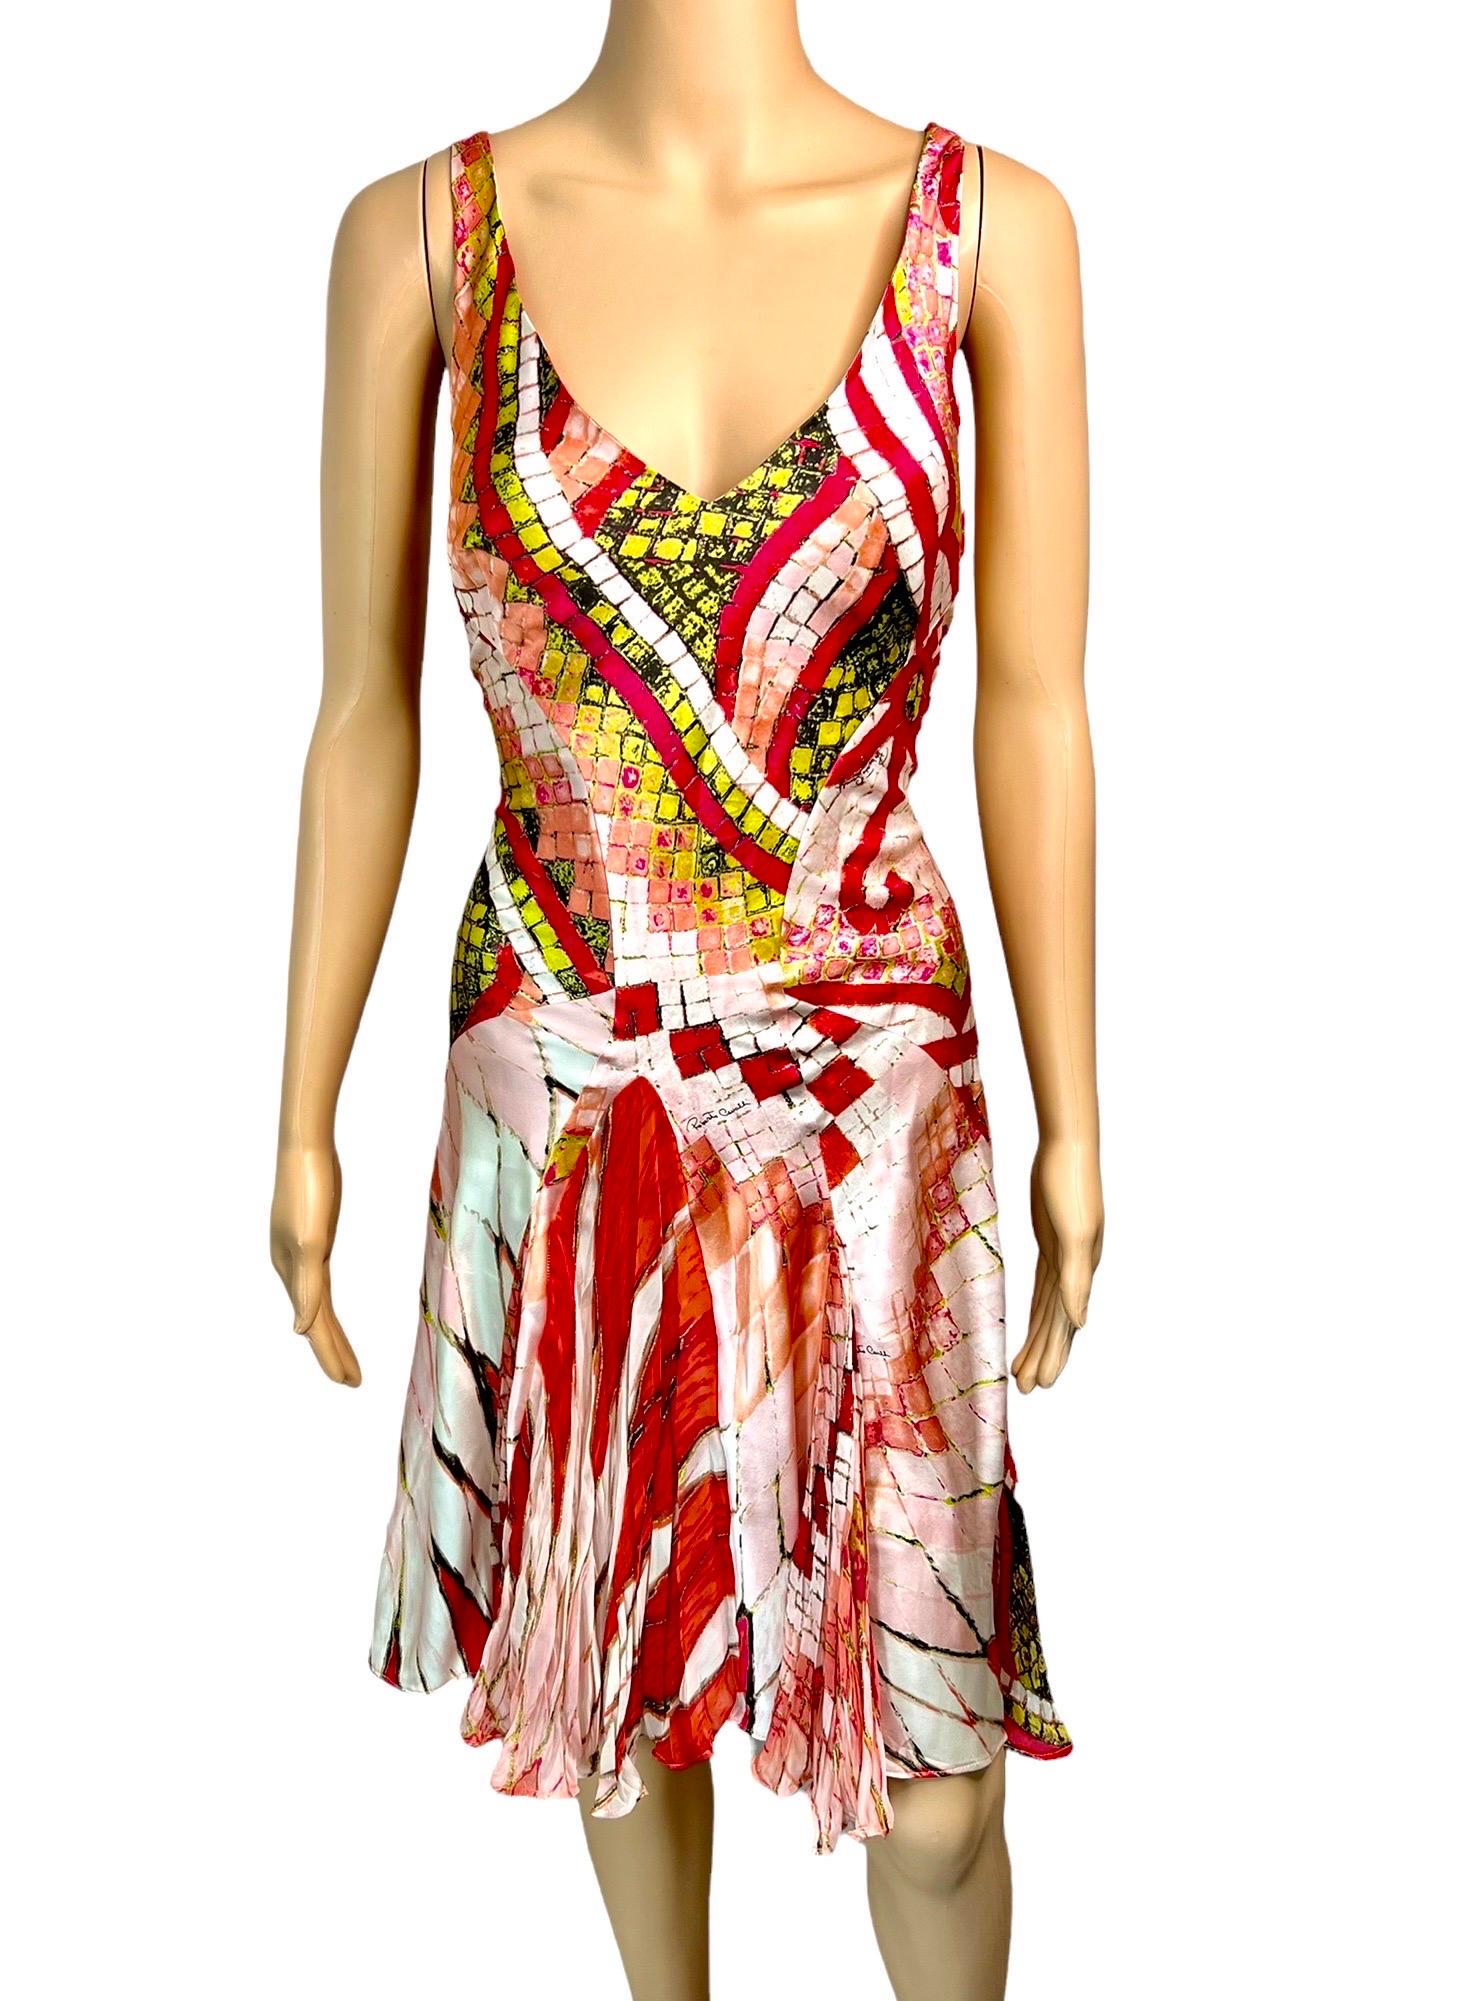 Roberto Cavalli S/S 2004 Plunging Neckline Silk Dress In Excellent Condition For Sale In Naples, FL